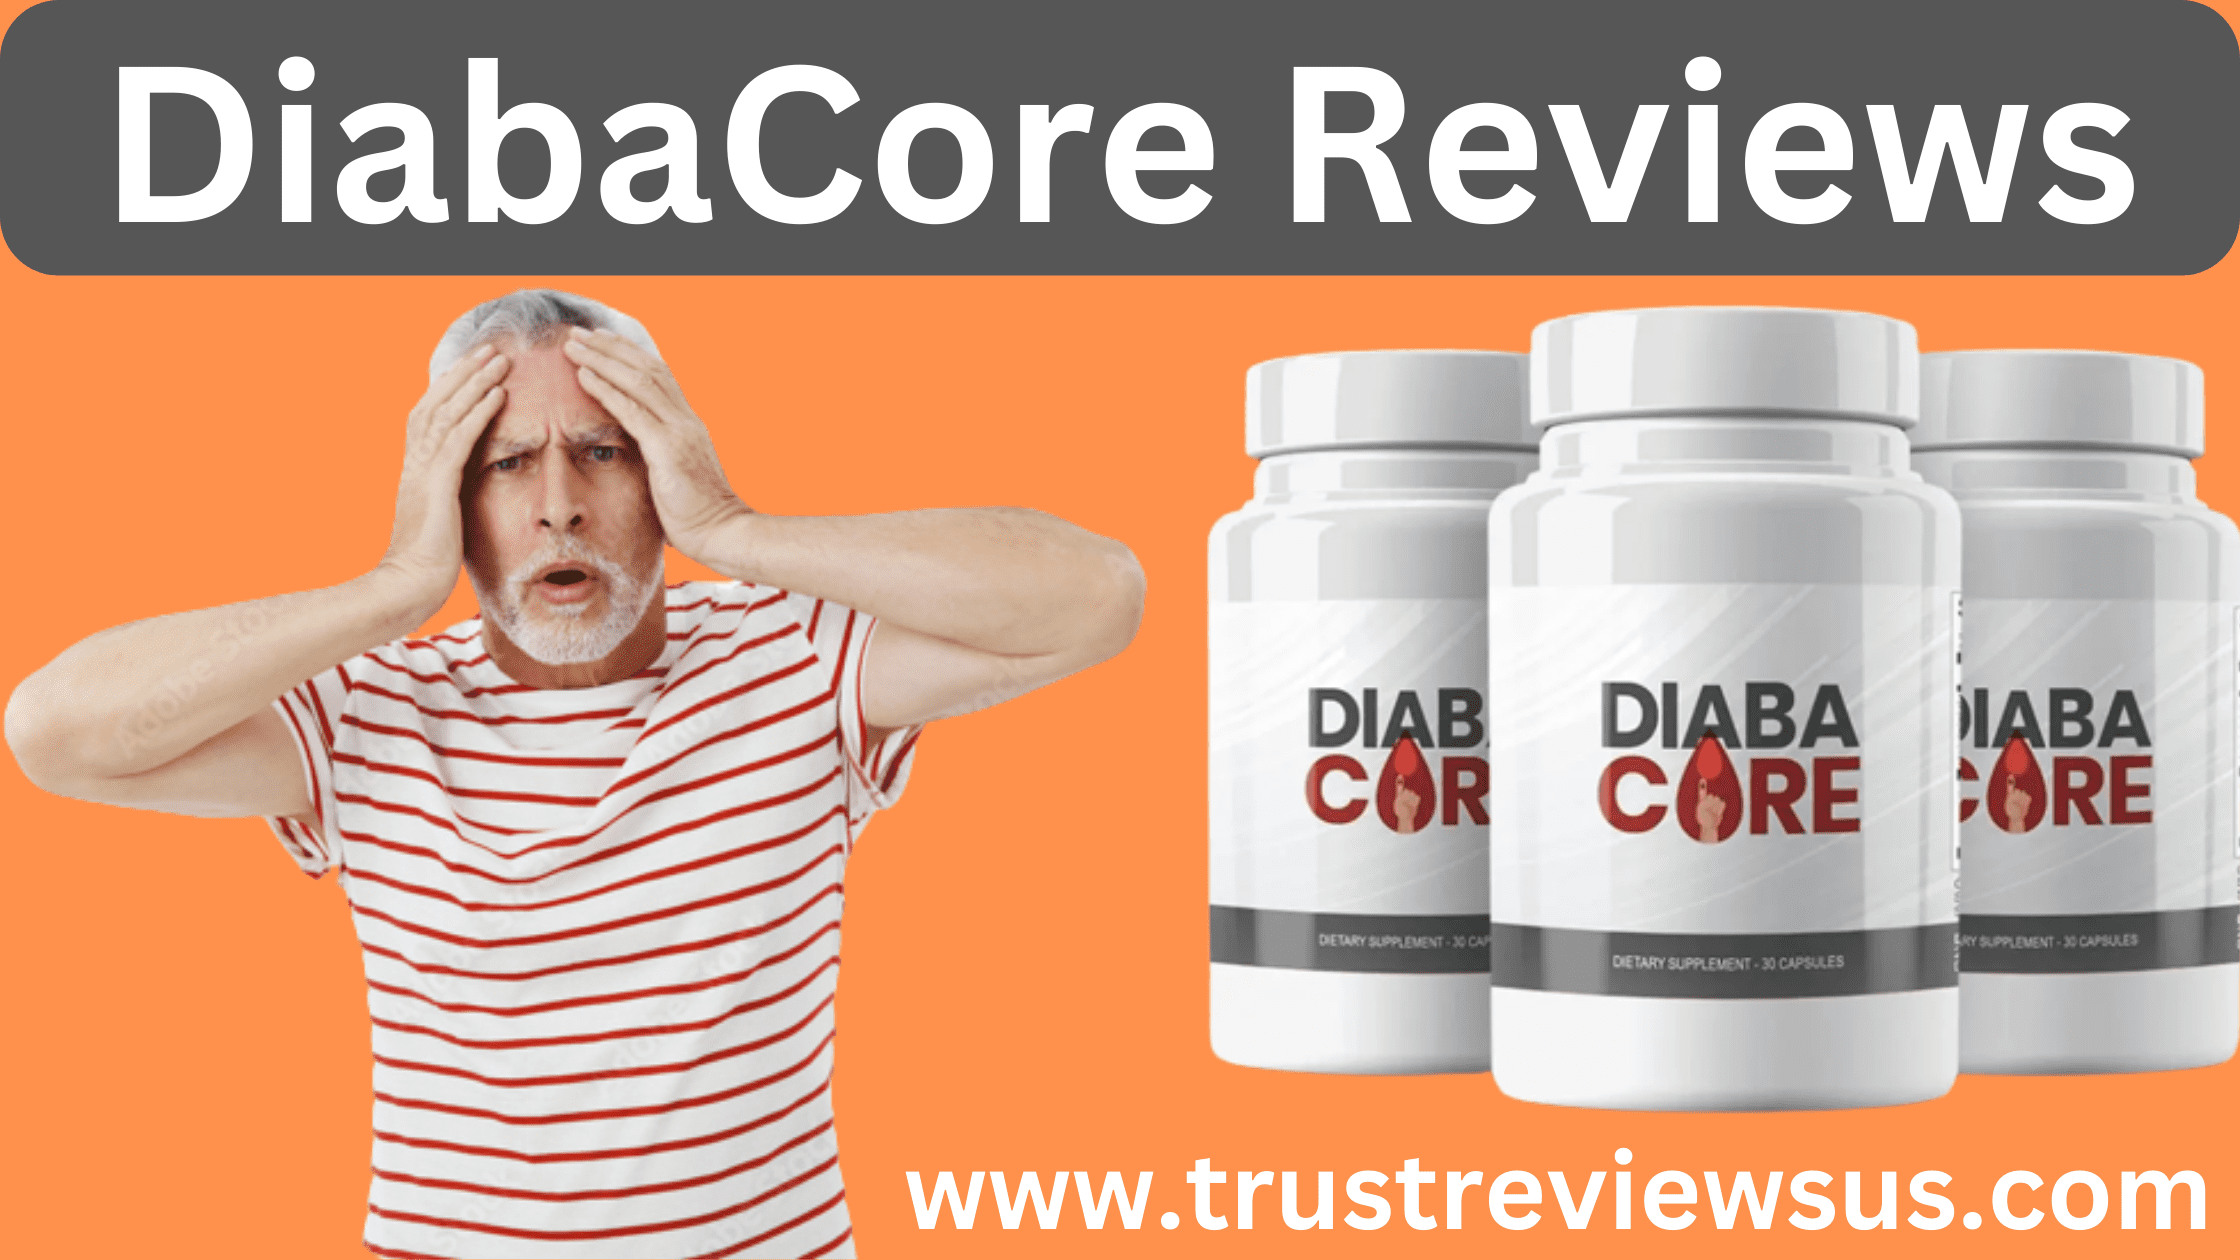 DiabaCore Reviews